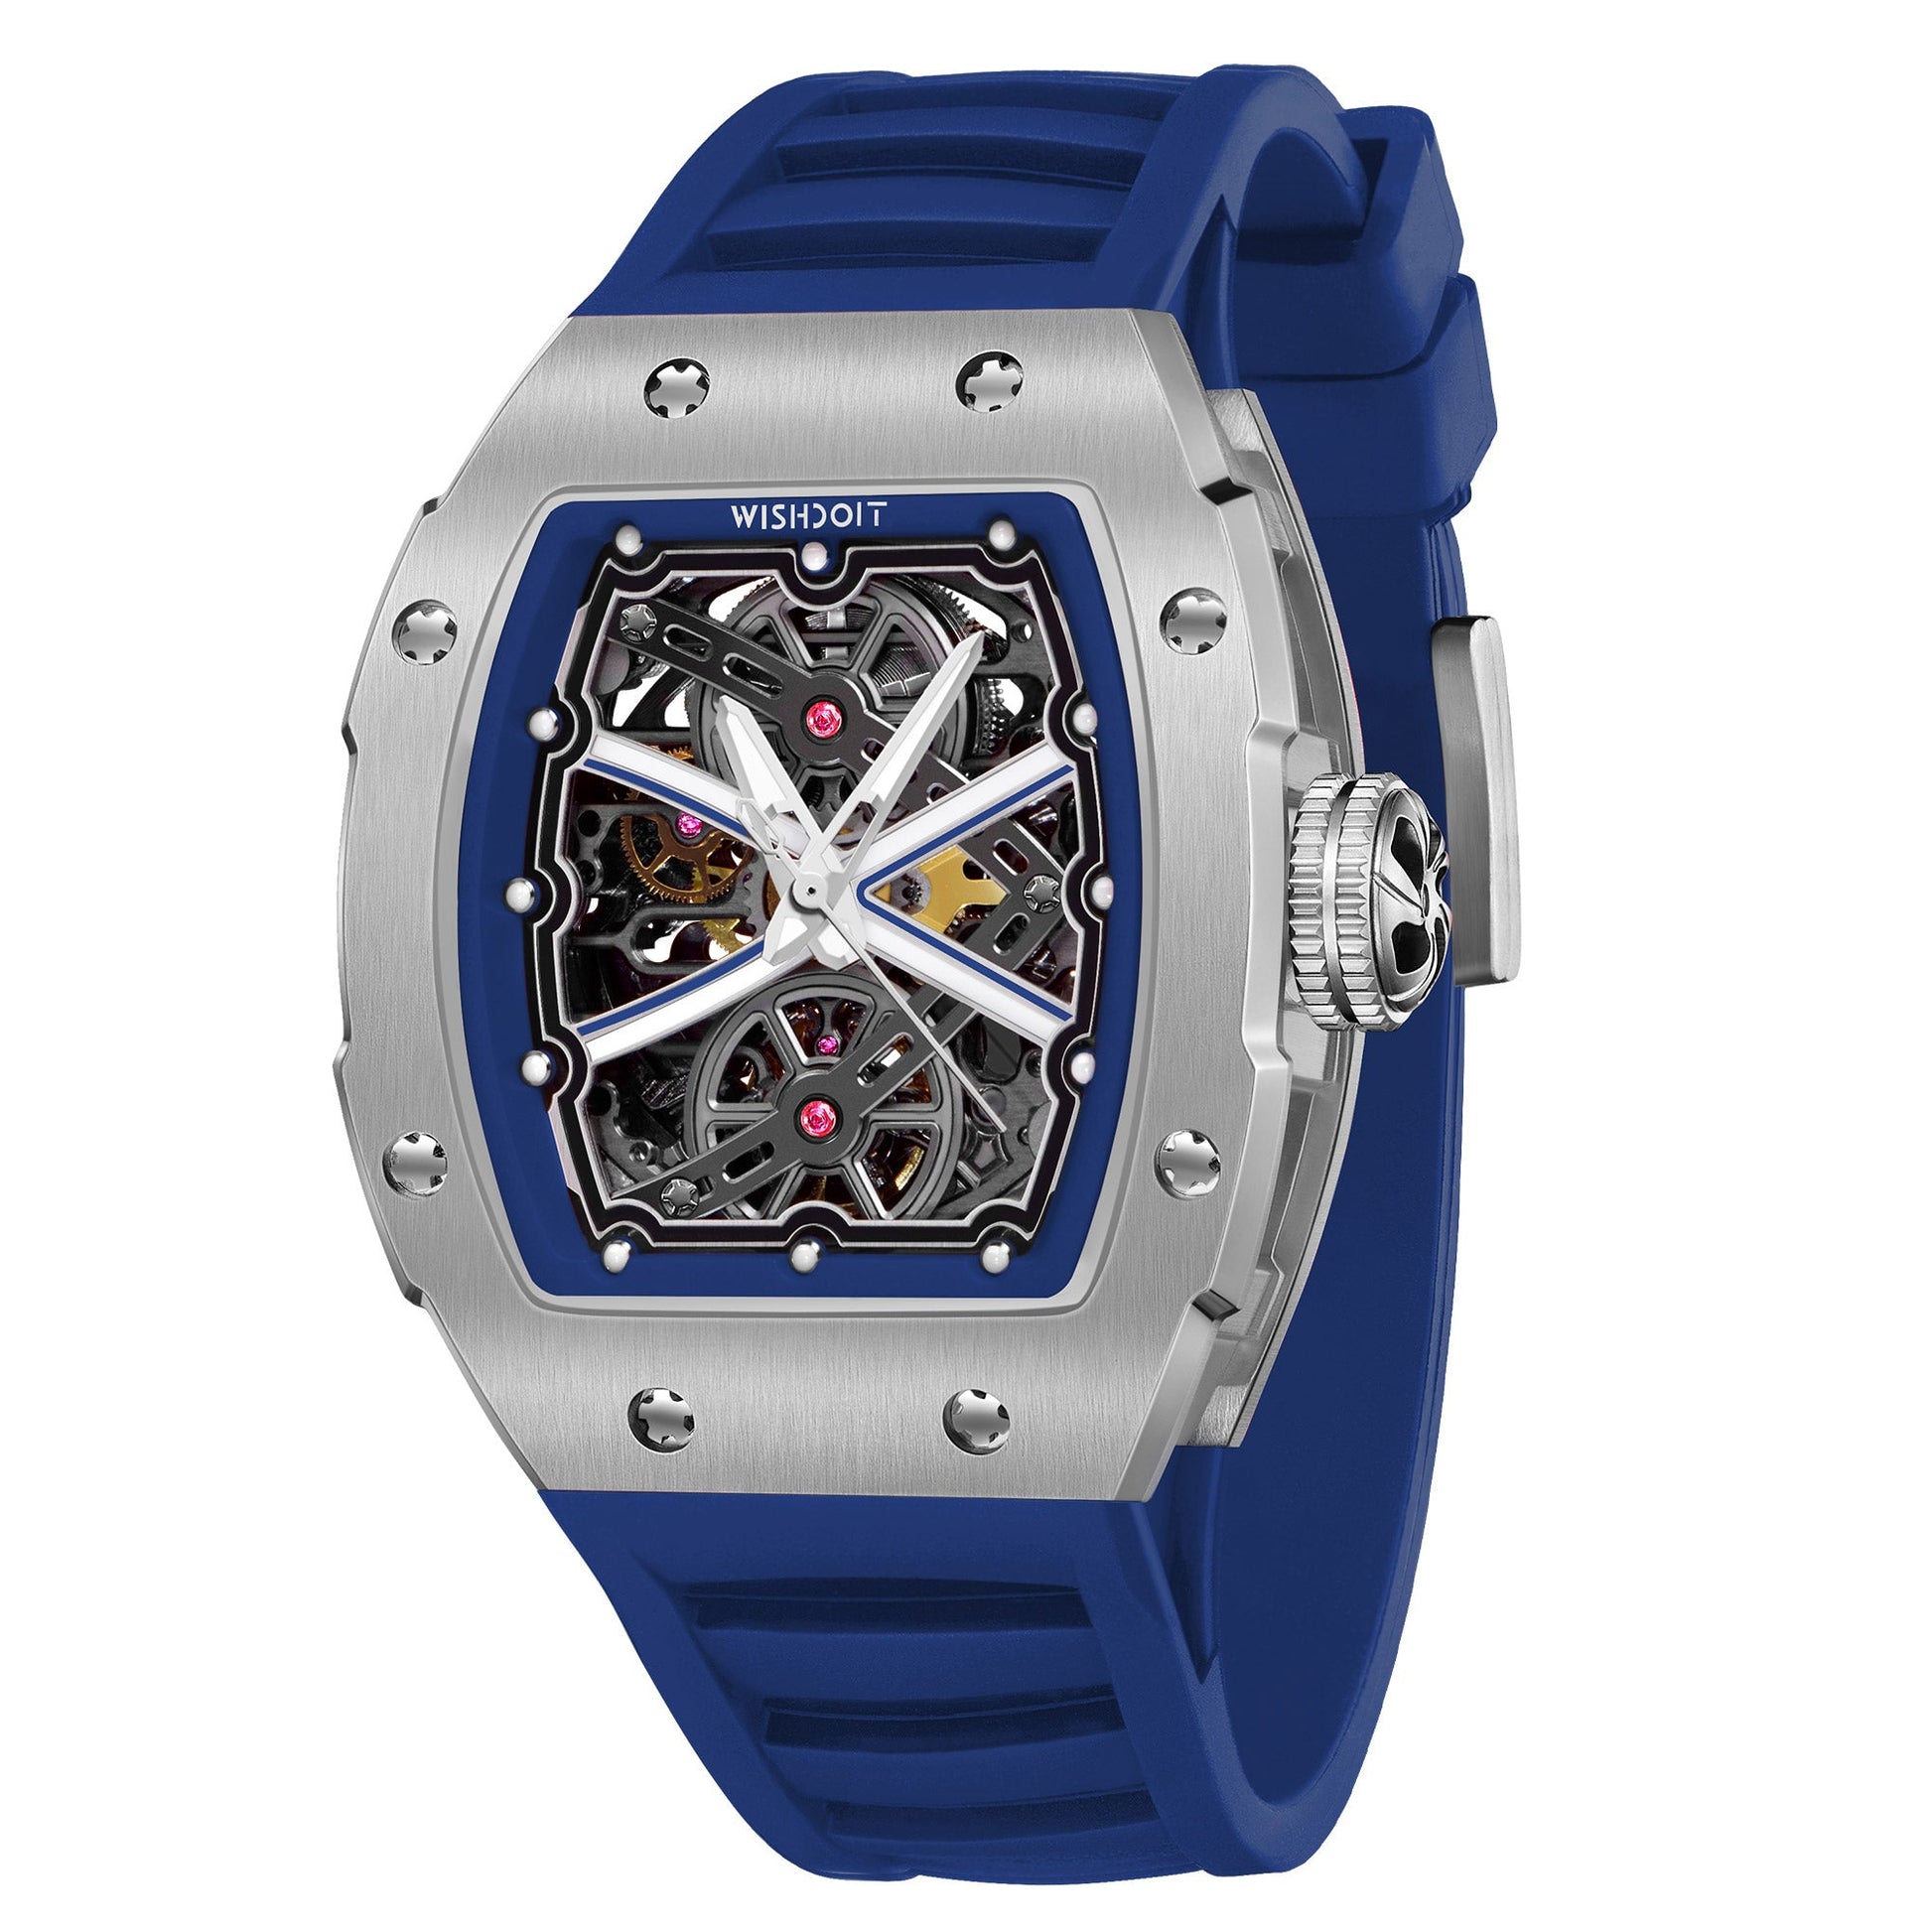 Best Mens Automatic Mechanical Runway Silver Blue Watch In Wishdoit Watches